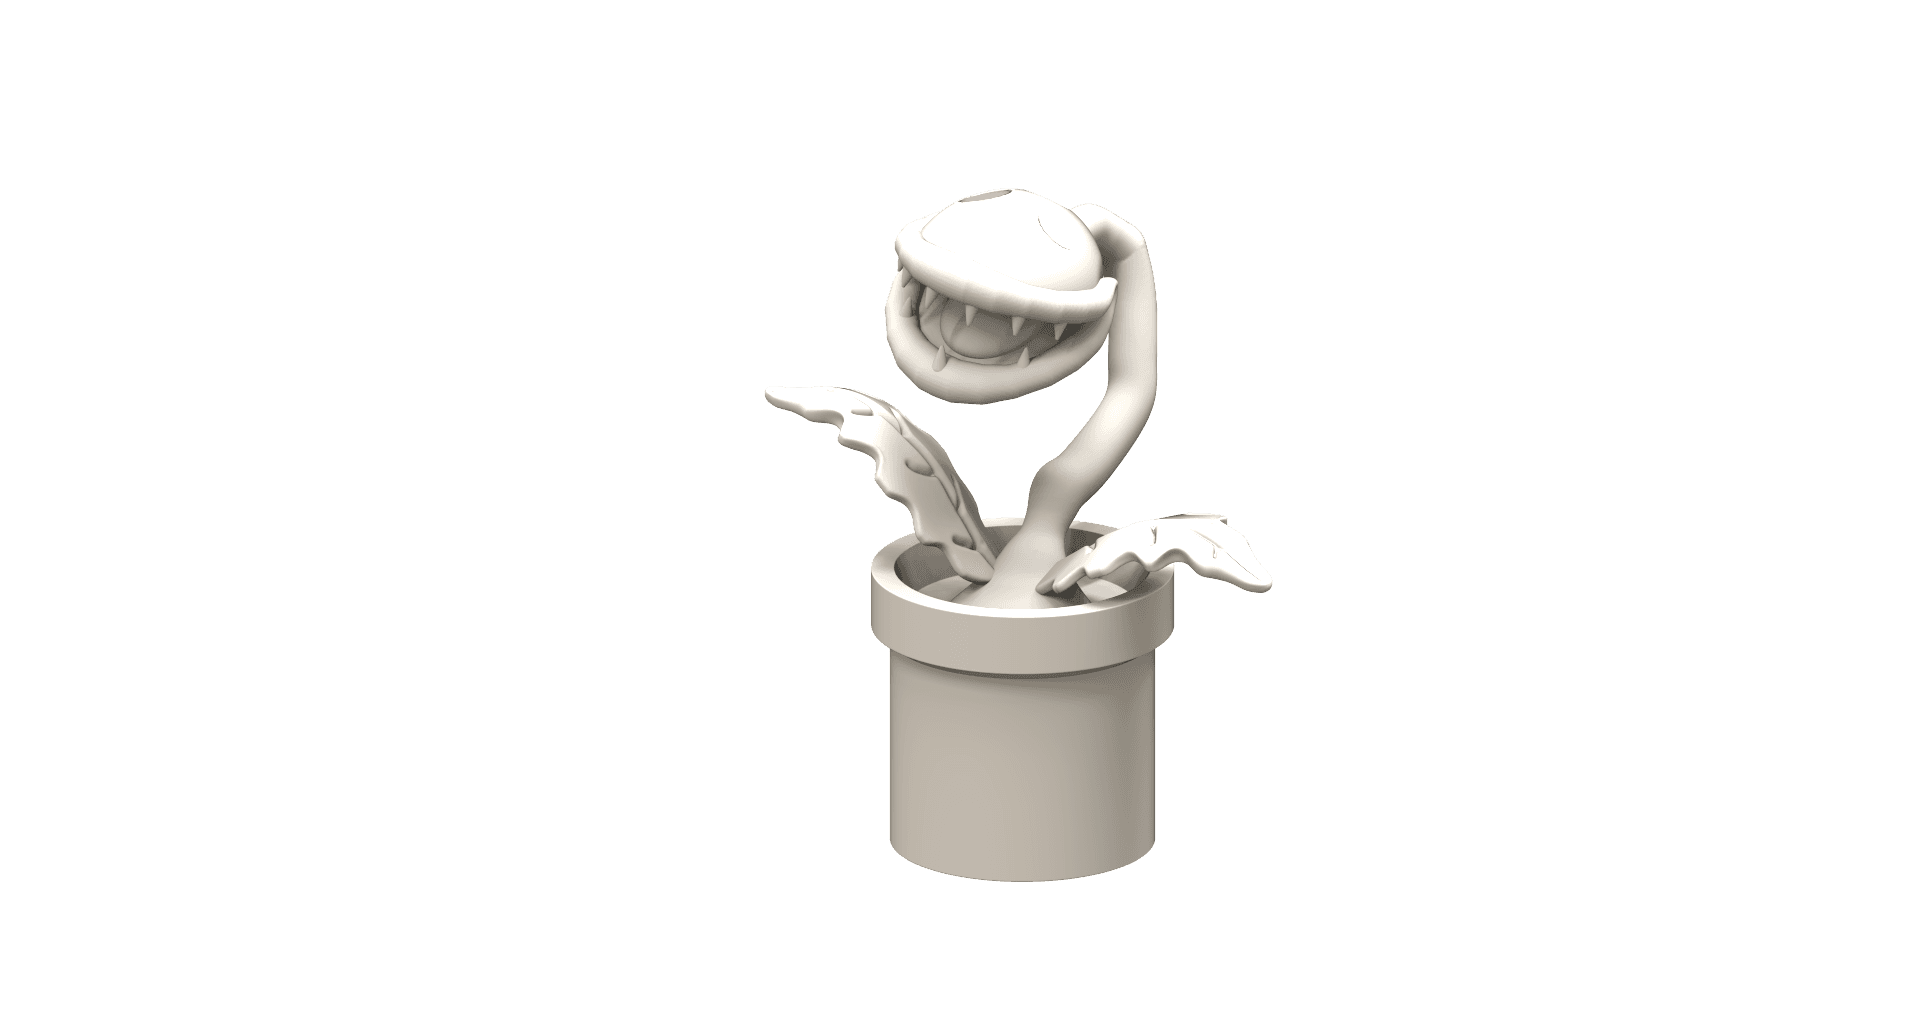 Piranha Plant - Mario Fan Art 3d model